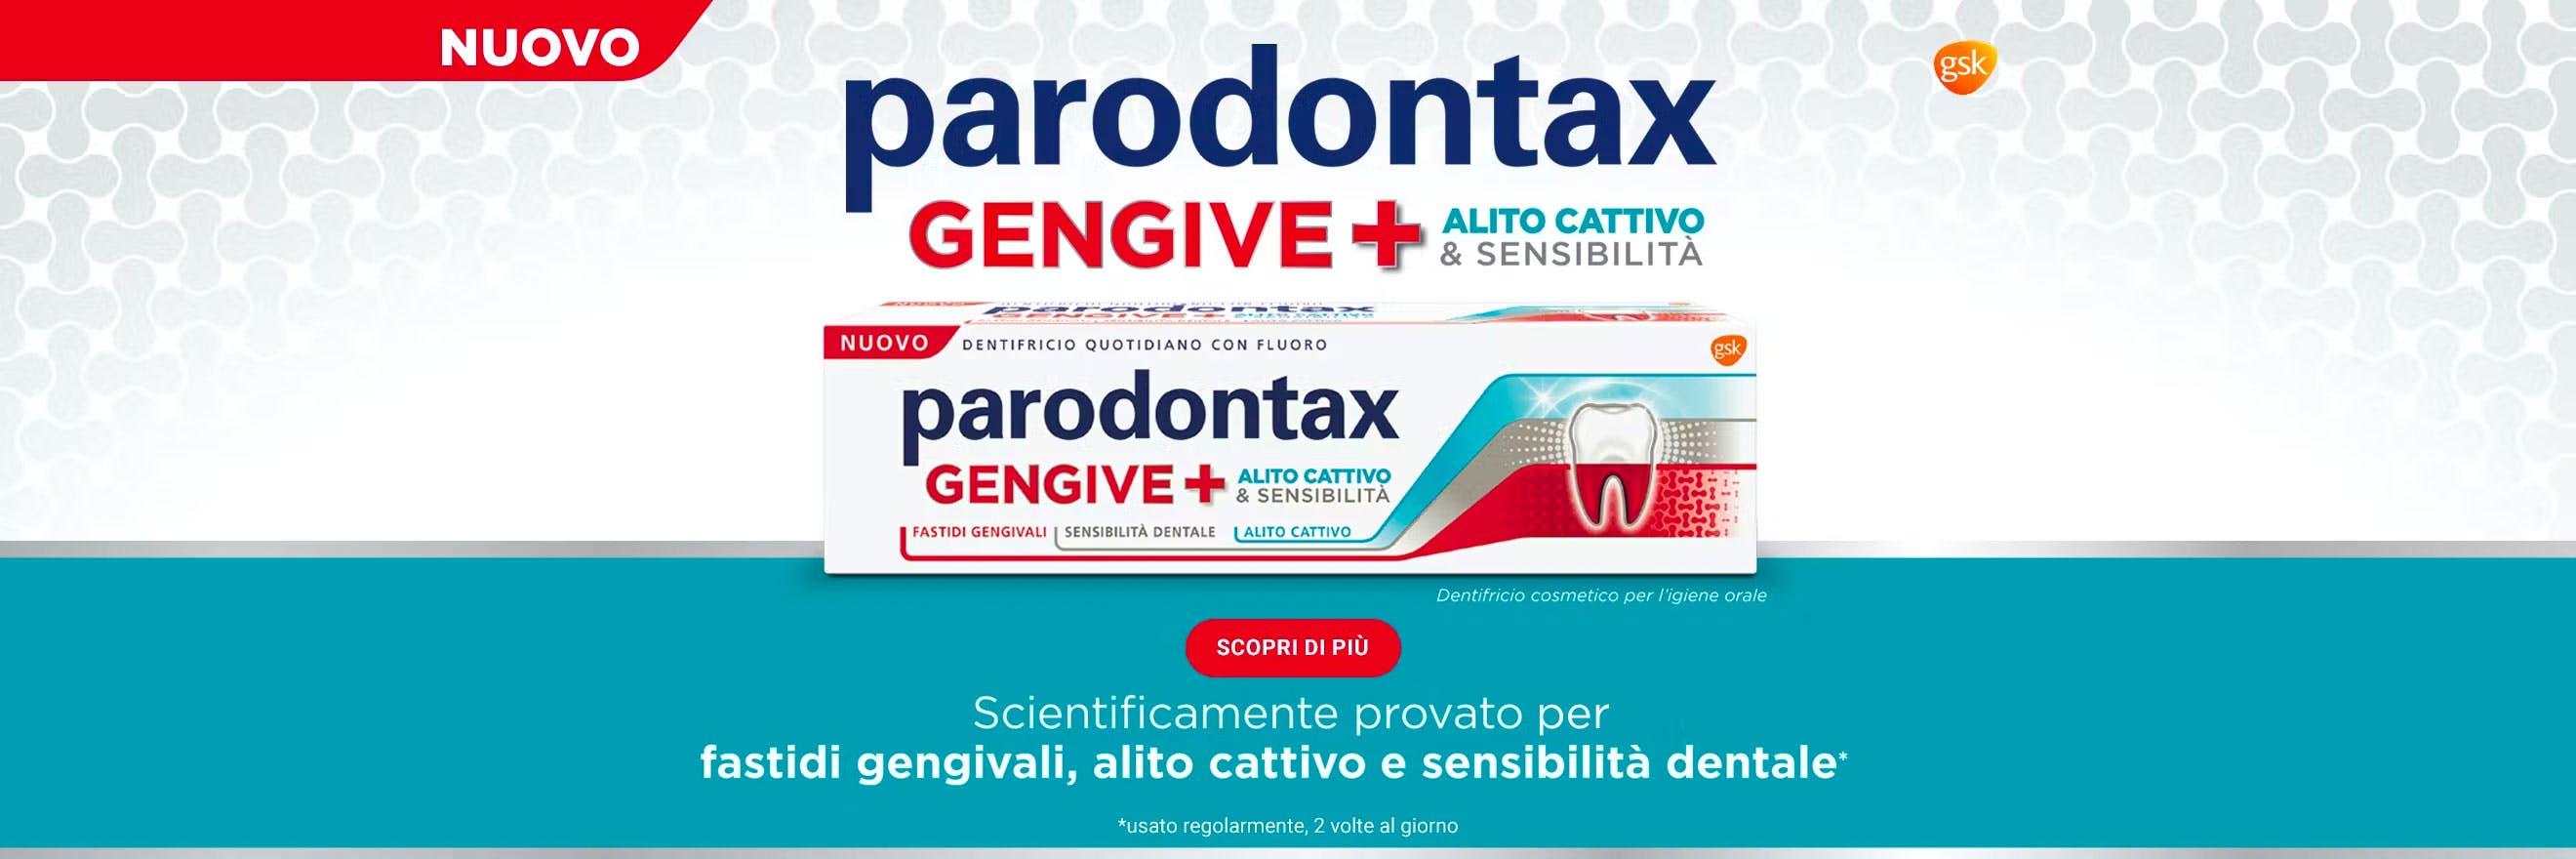 paradontax_gengive+